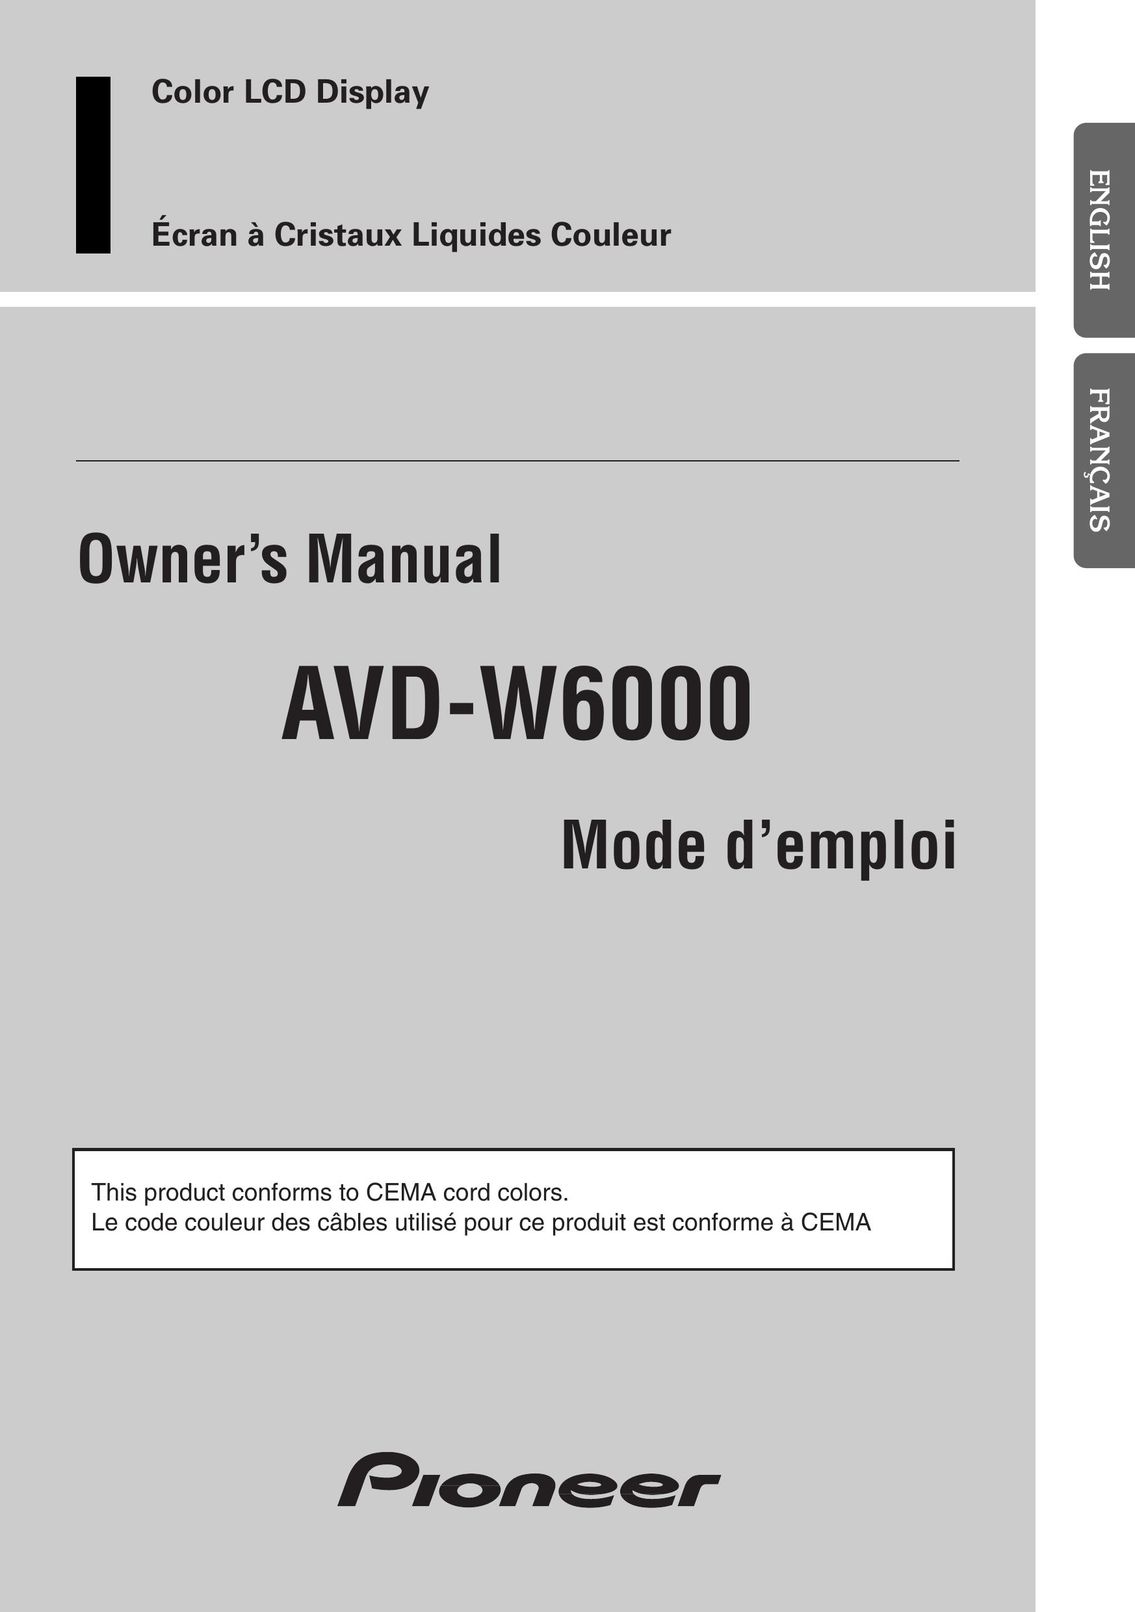 Pioneer AVD-W6000 Car Stereo System User Manual